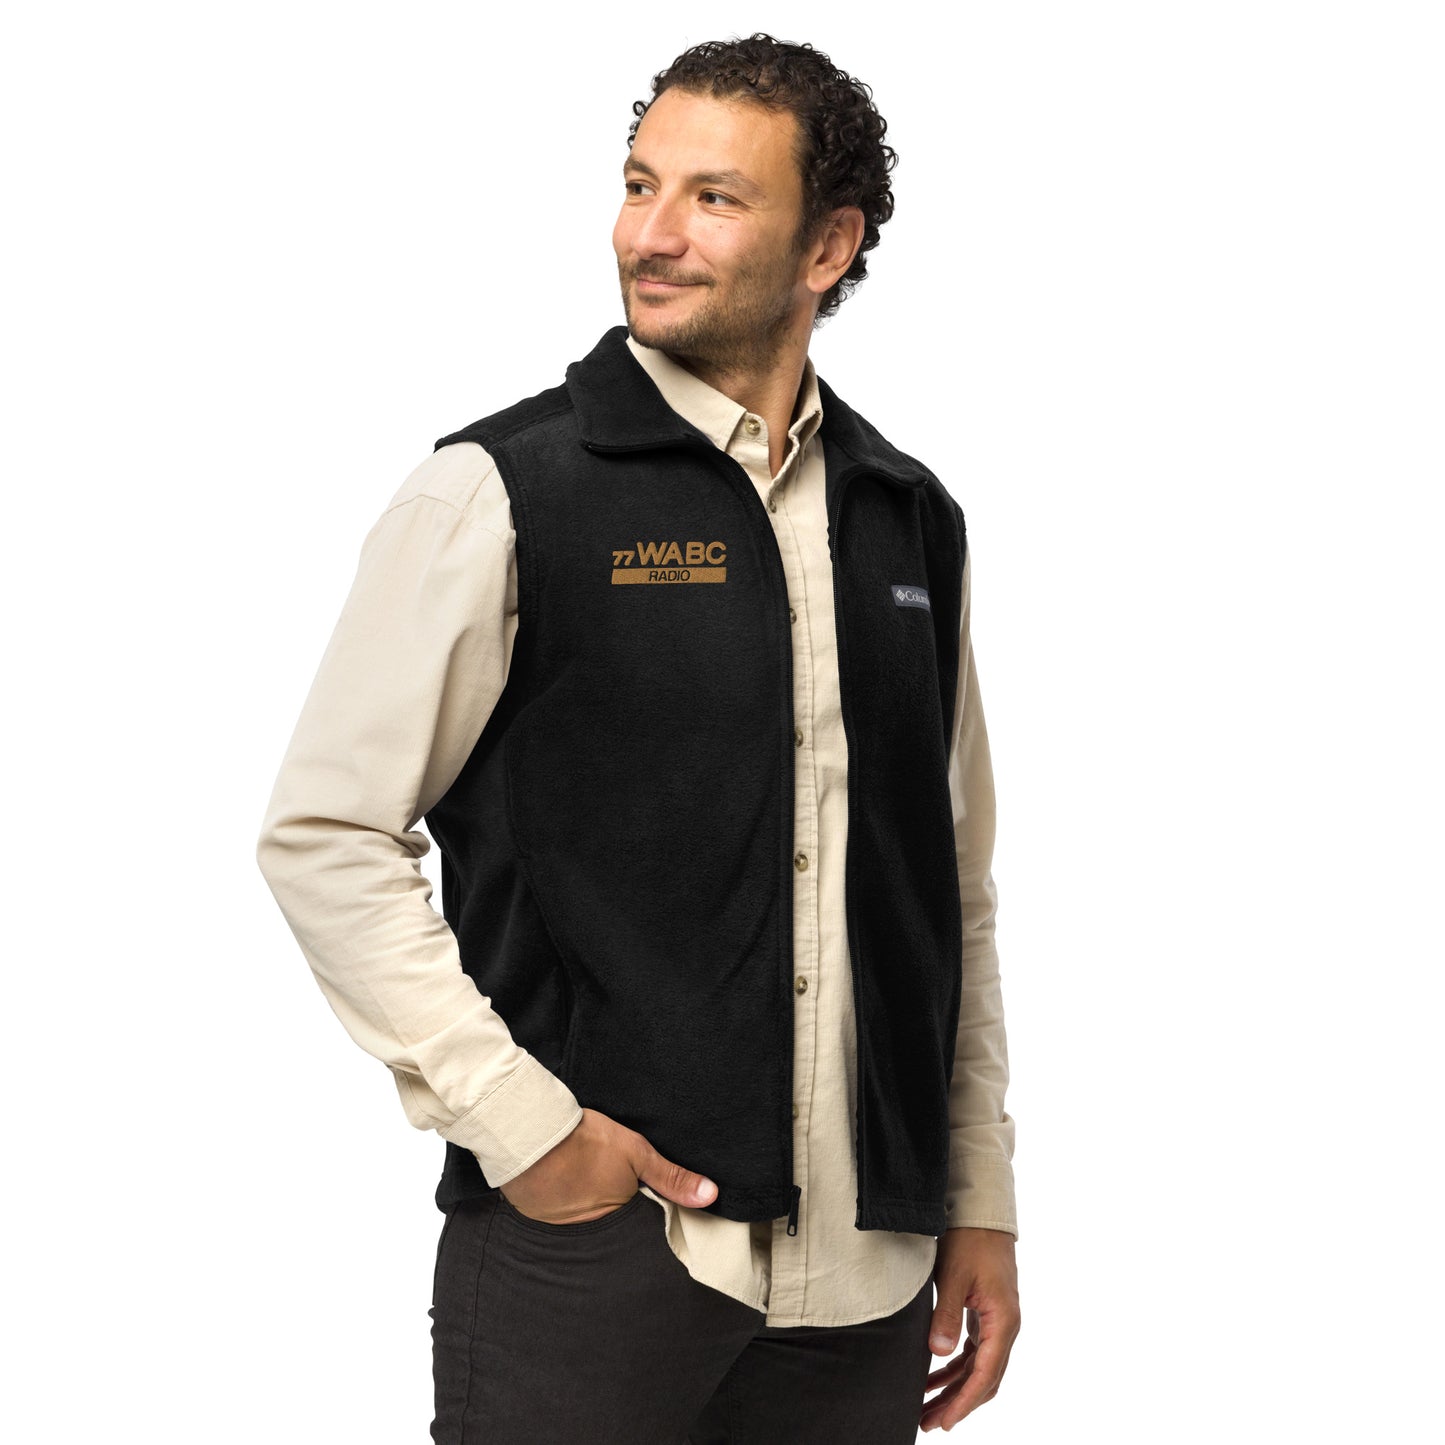 Unisex Embroidered 77WABC Columbia fleece vest